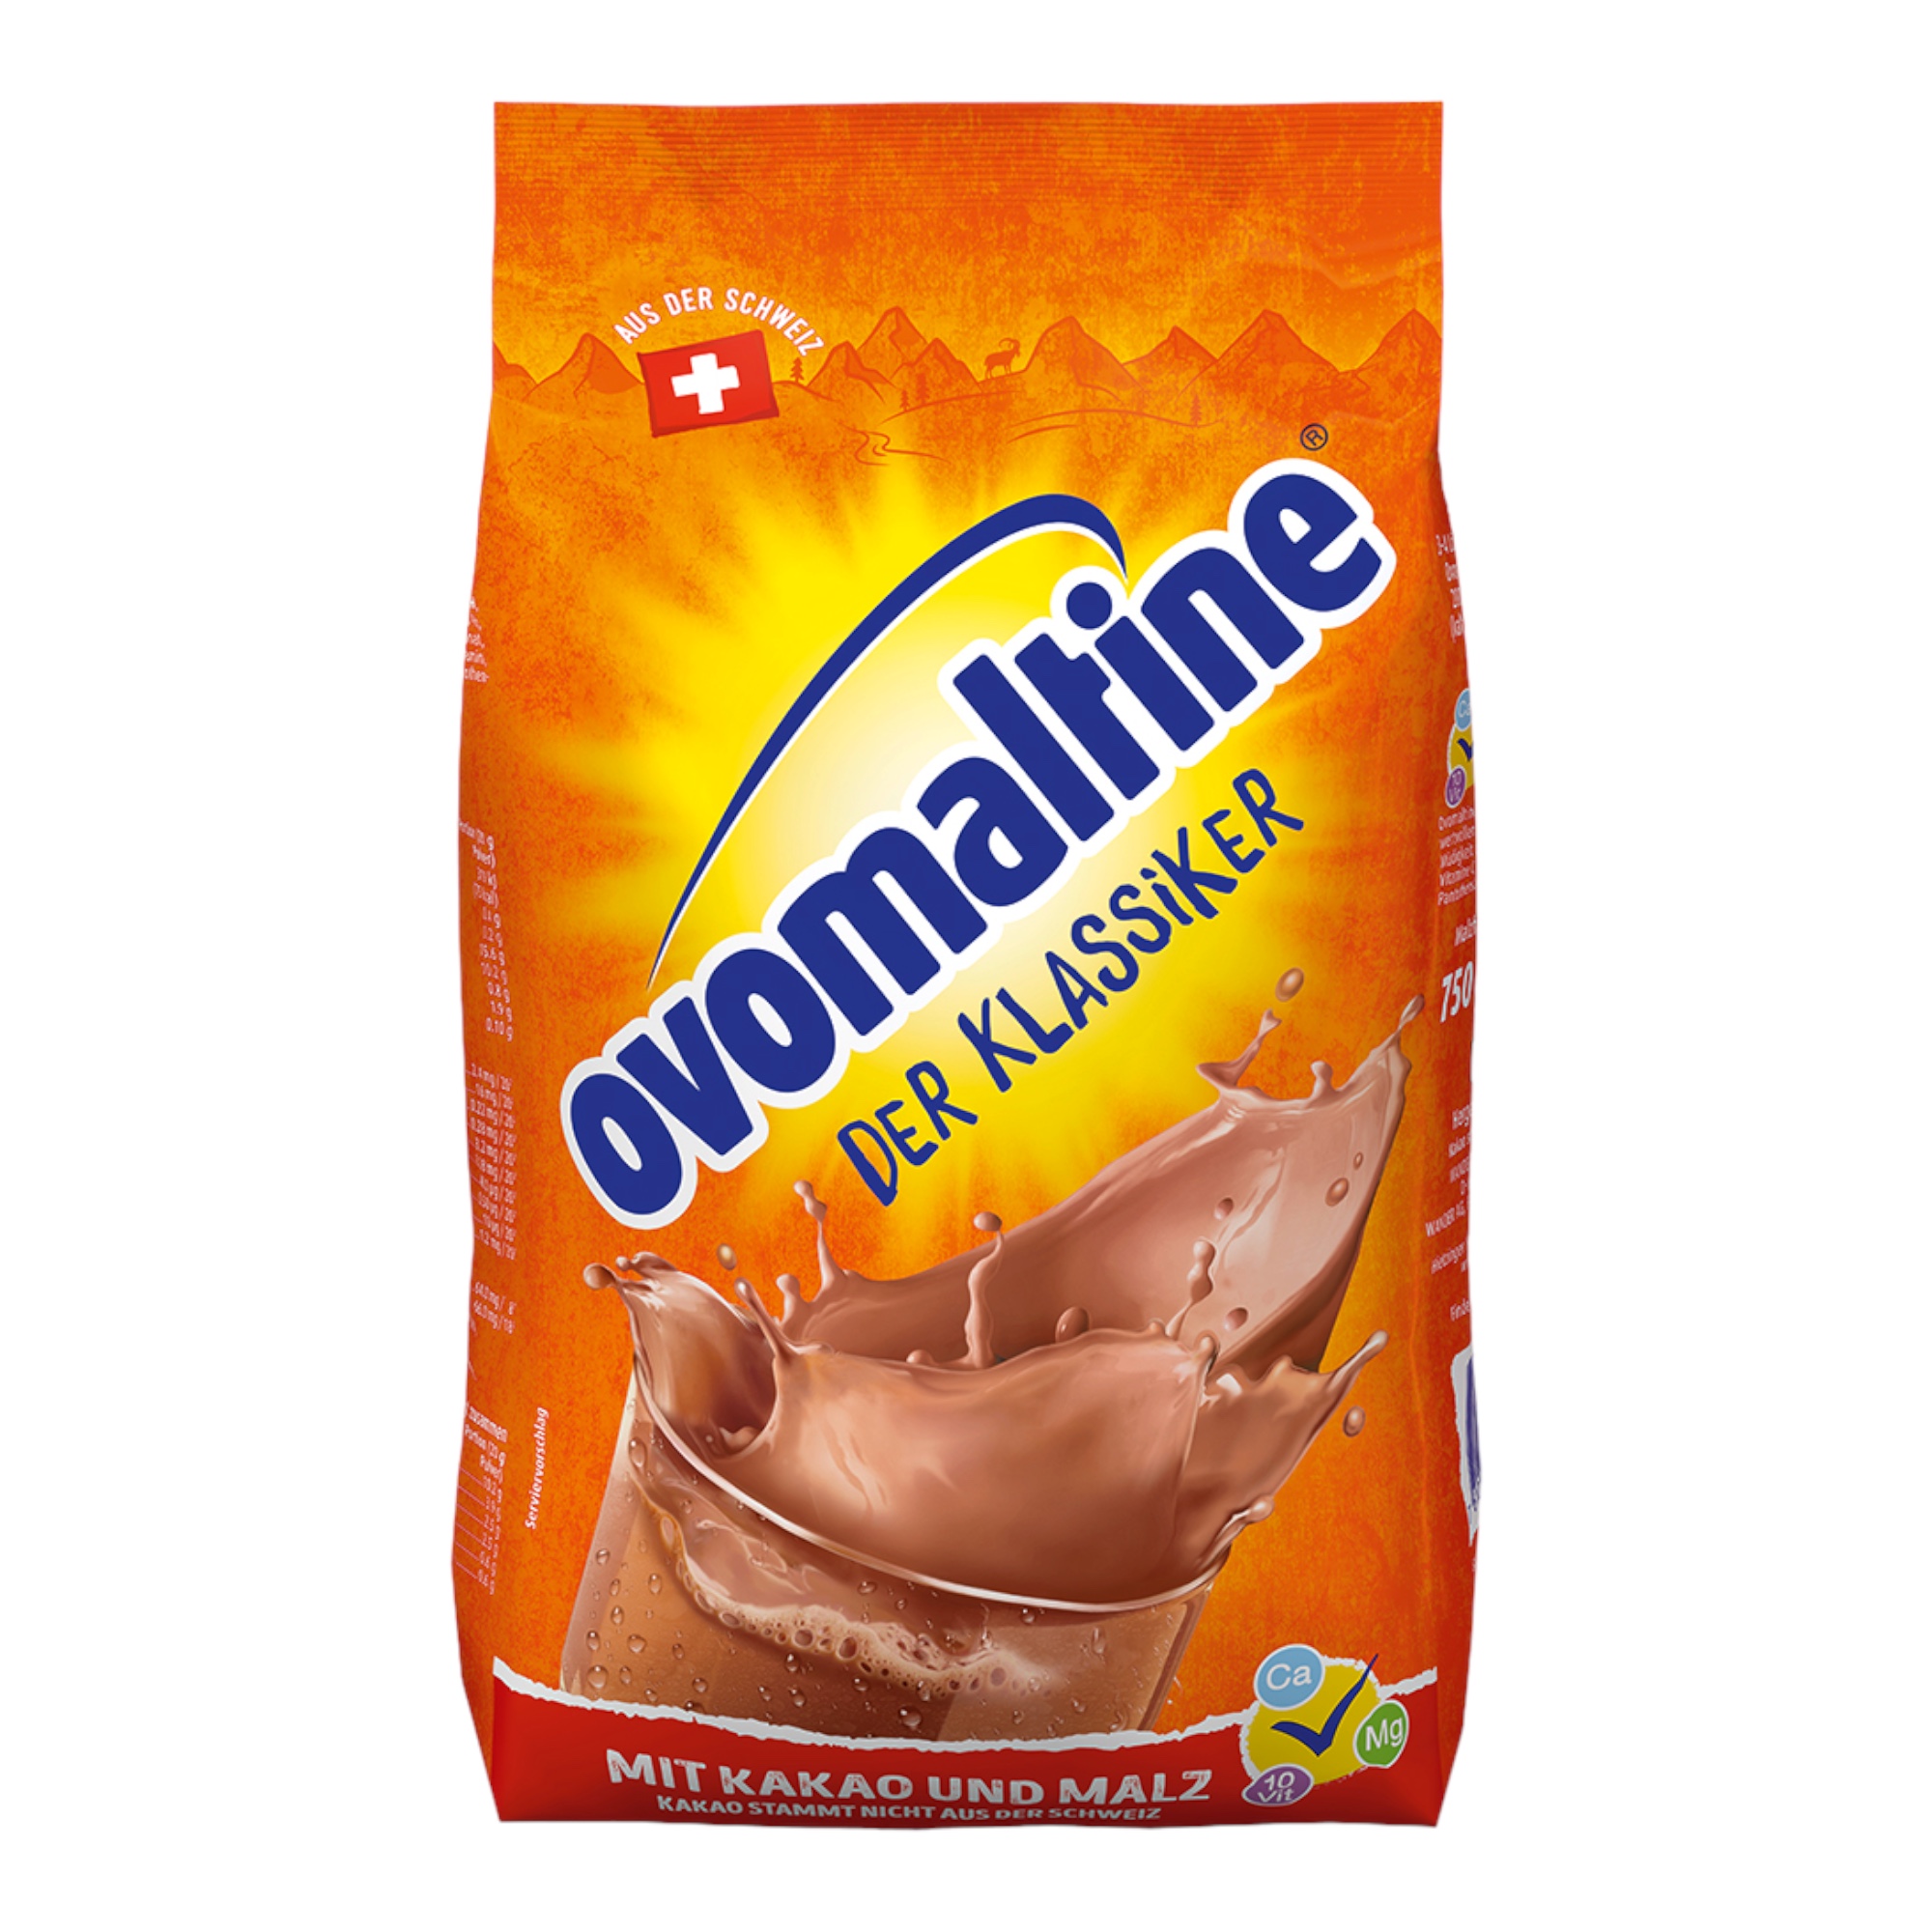 Buy Ovomaltine Chocolate Powder Beverage Mix (750g) cheaply